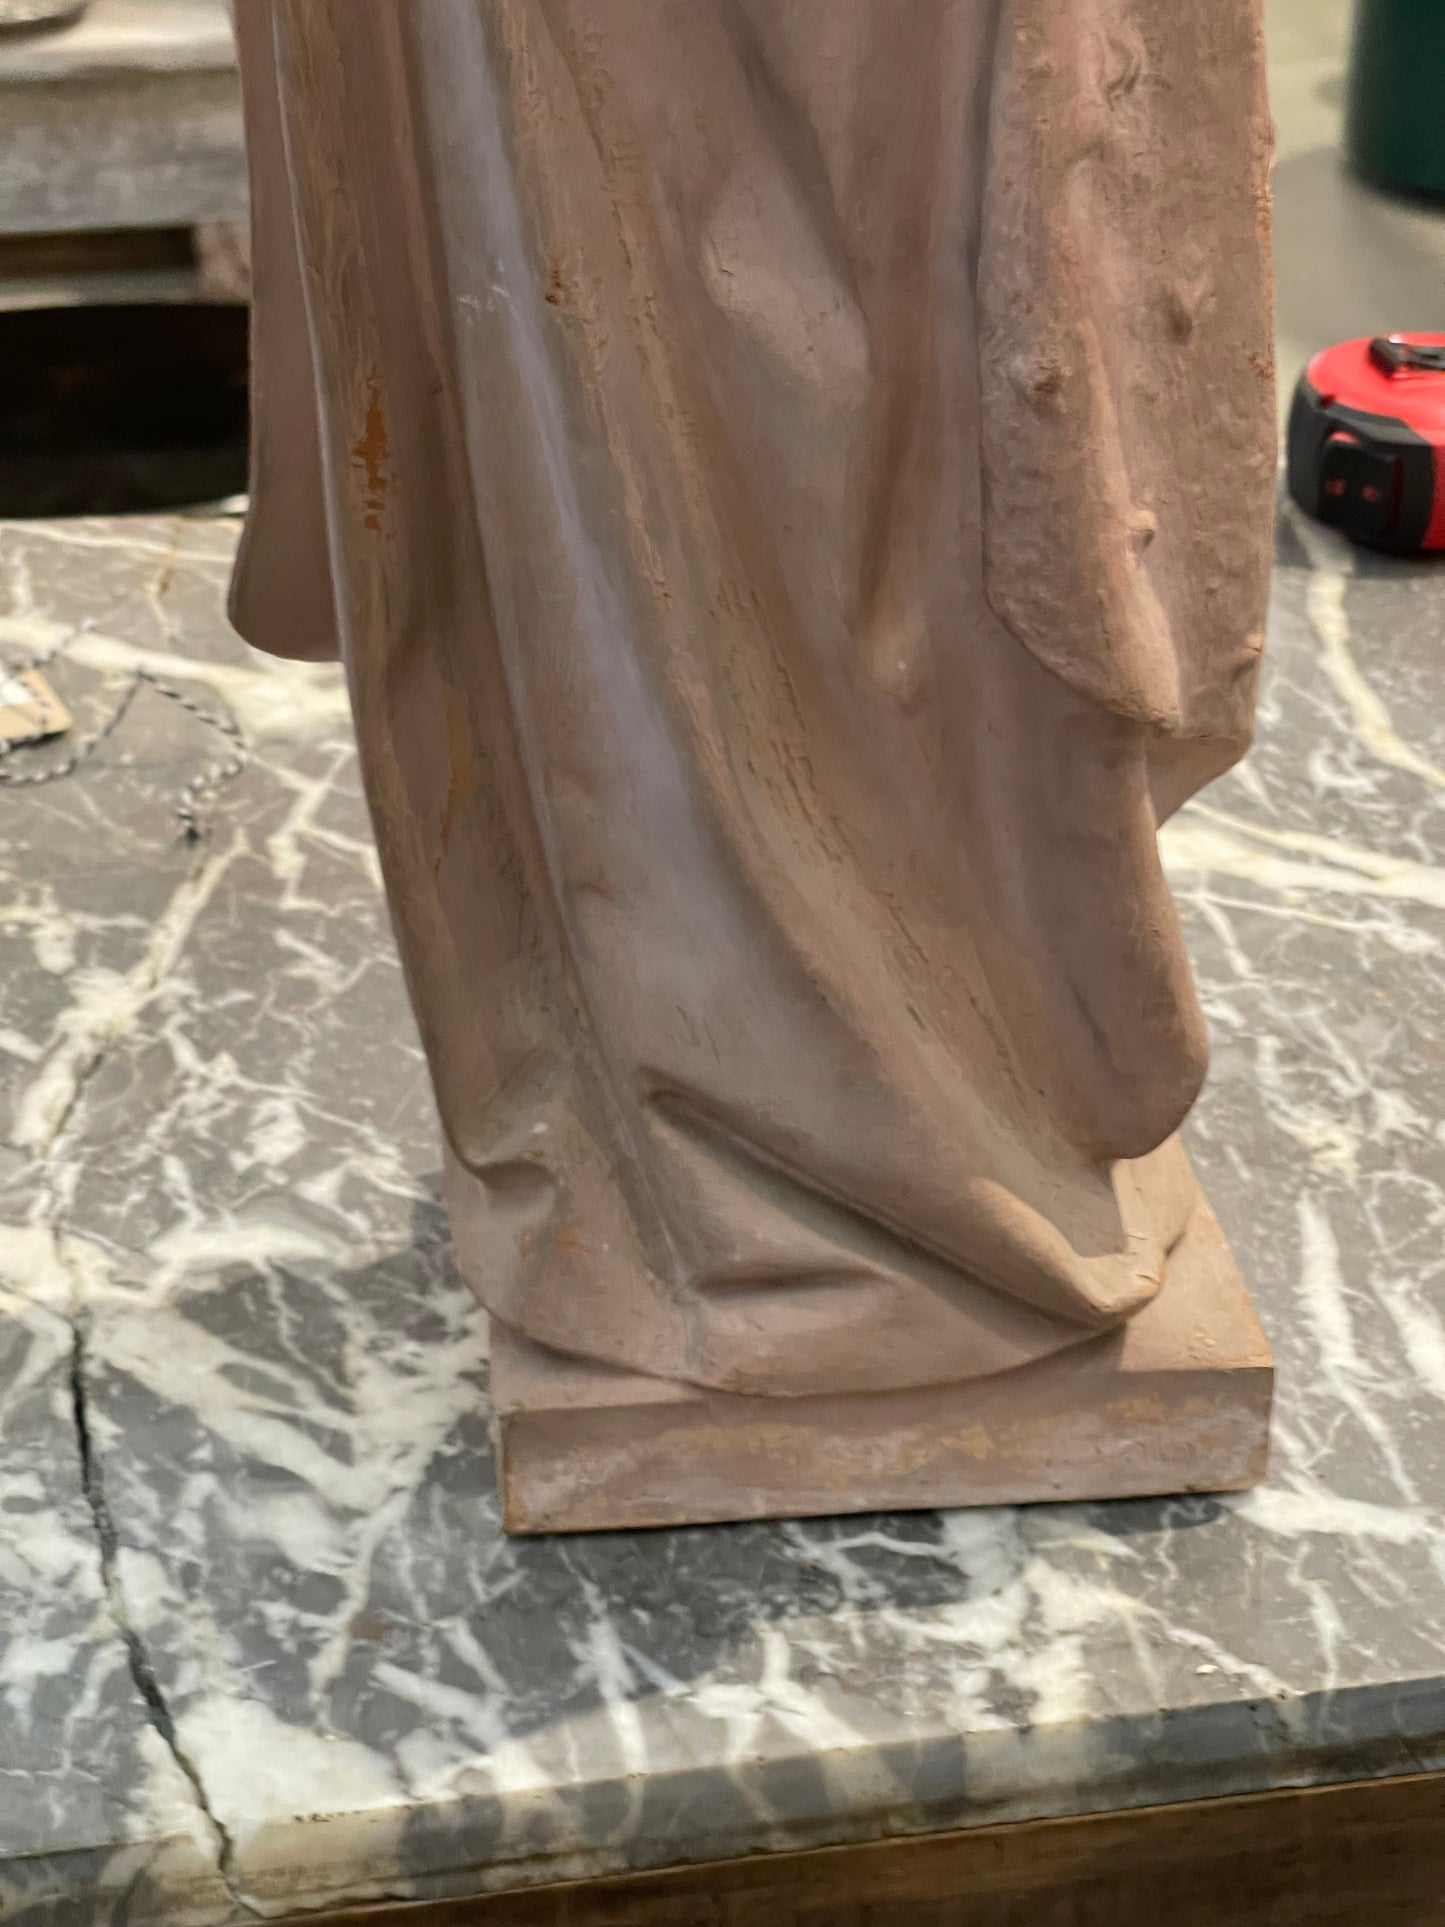 Religious Statue of St Louis